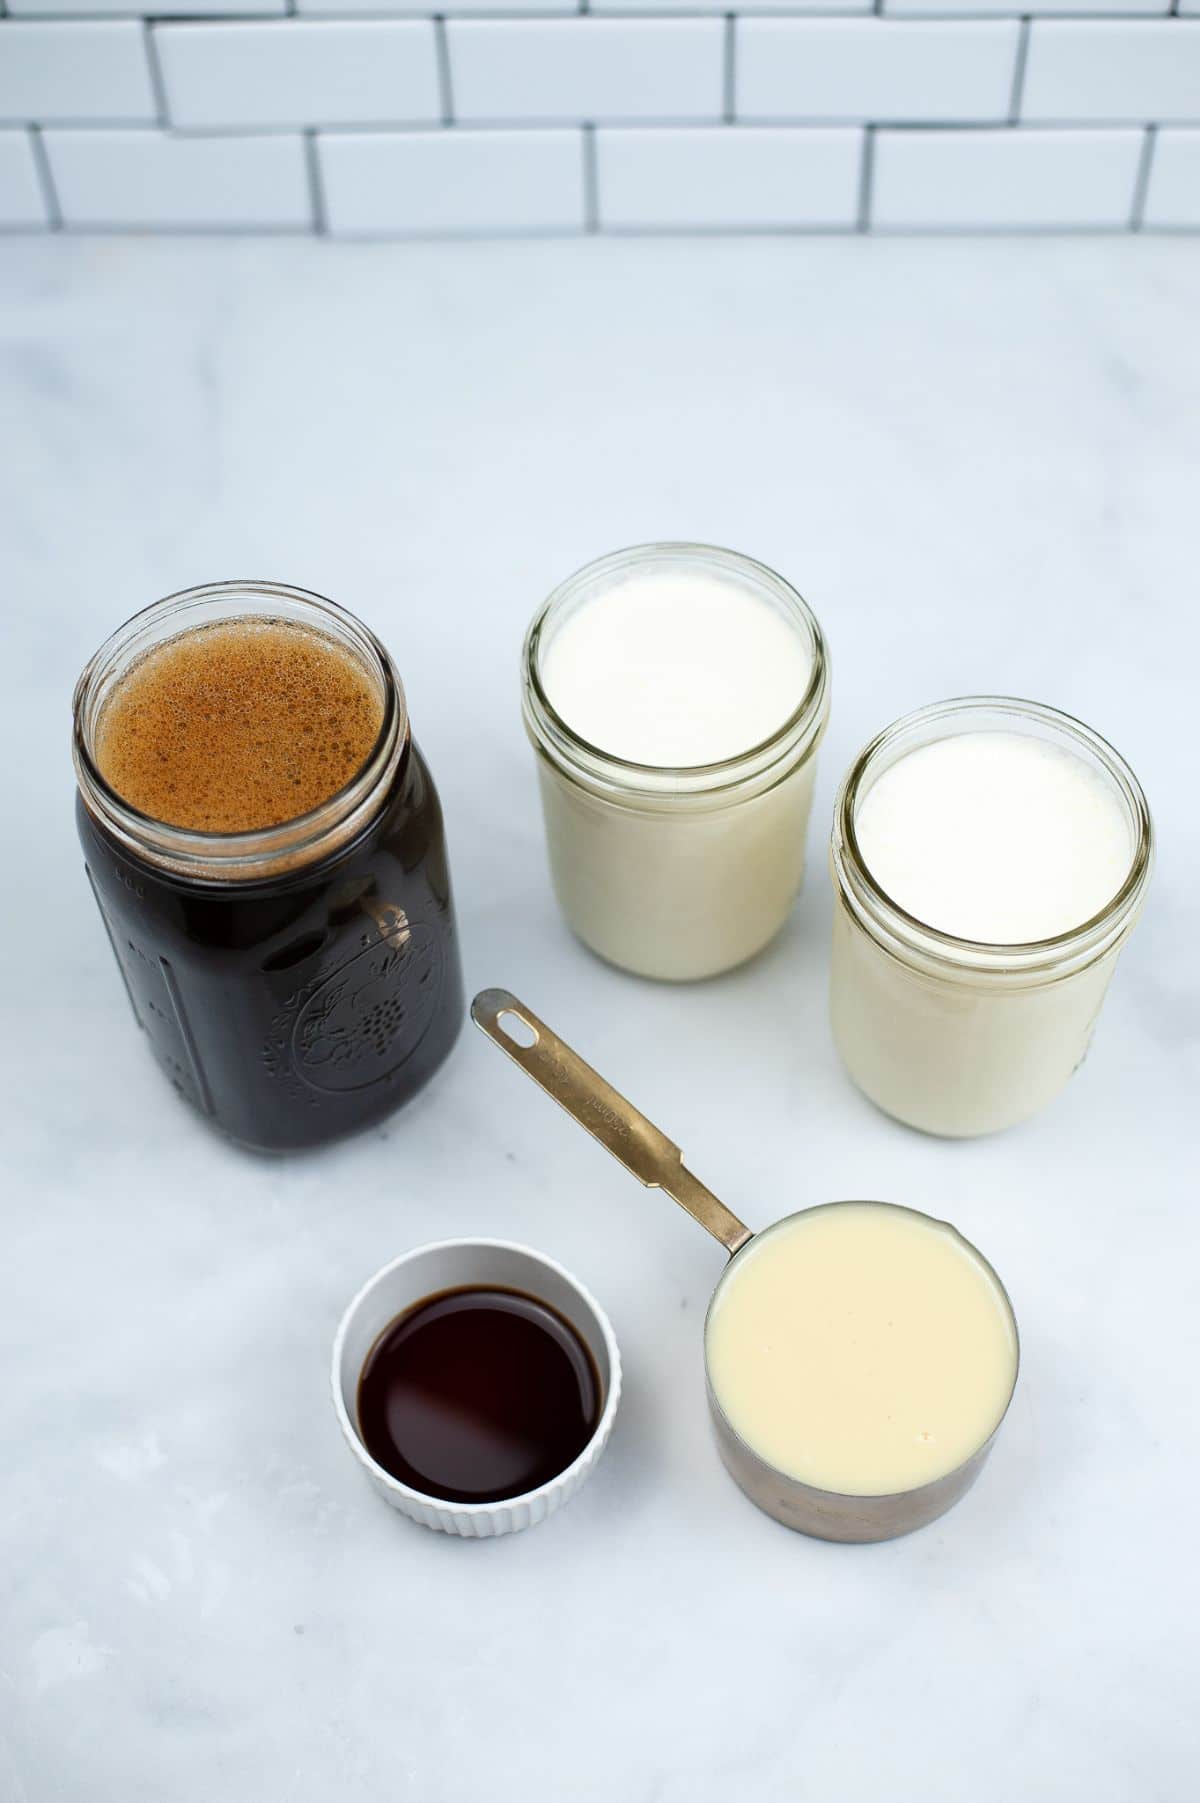 Ingredients used to make Starbucks Copycat Vanilla Sweet Cream.